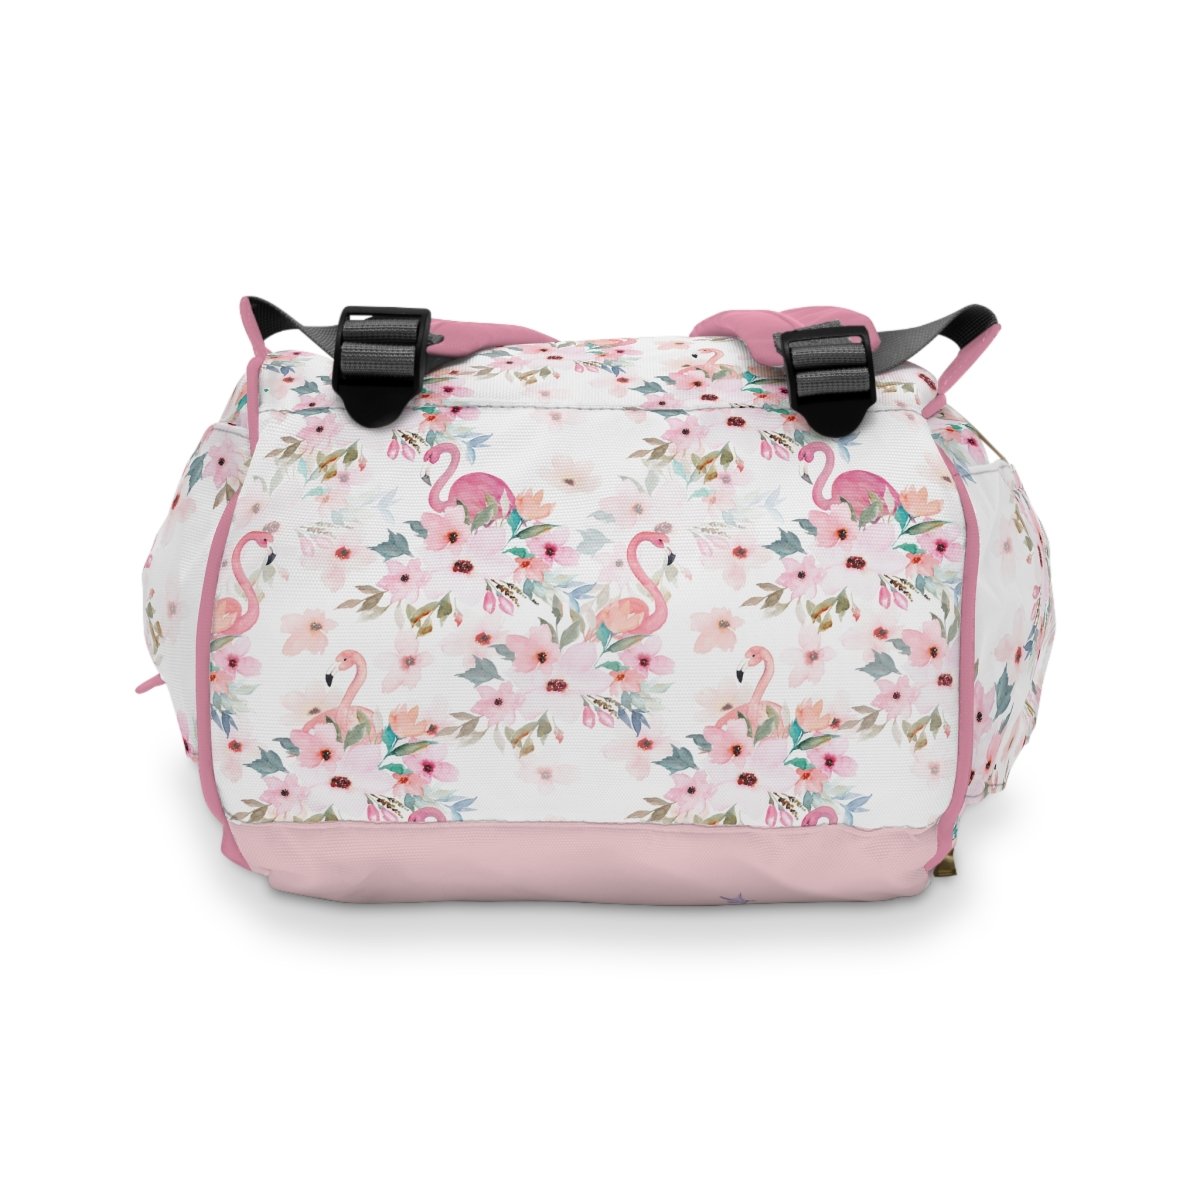 Flamingo Floral Personalized Backpack Diaper Bag - Flamingo Floral, gender_girl, text